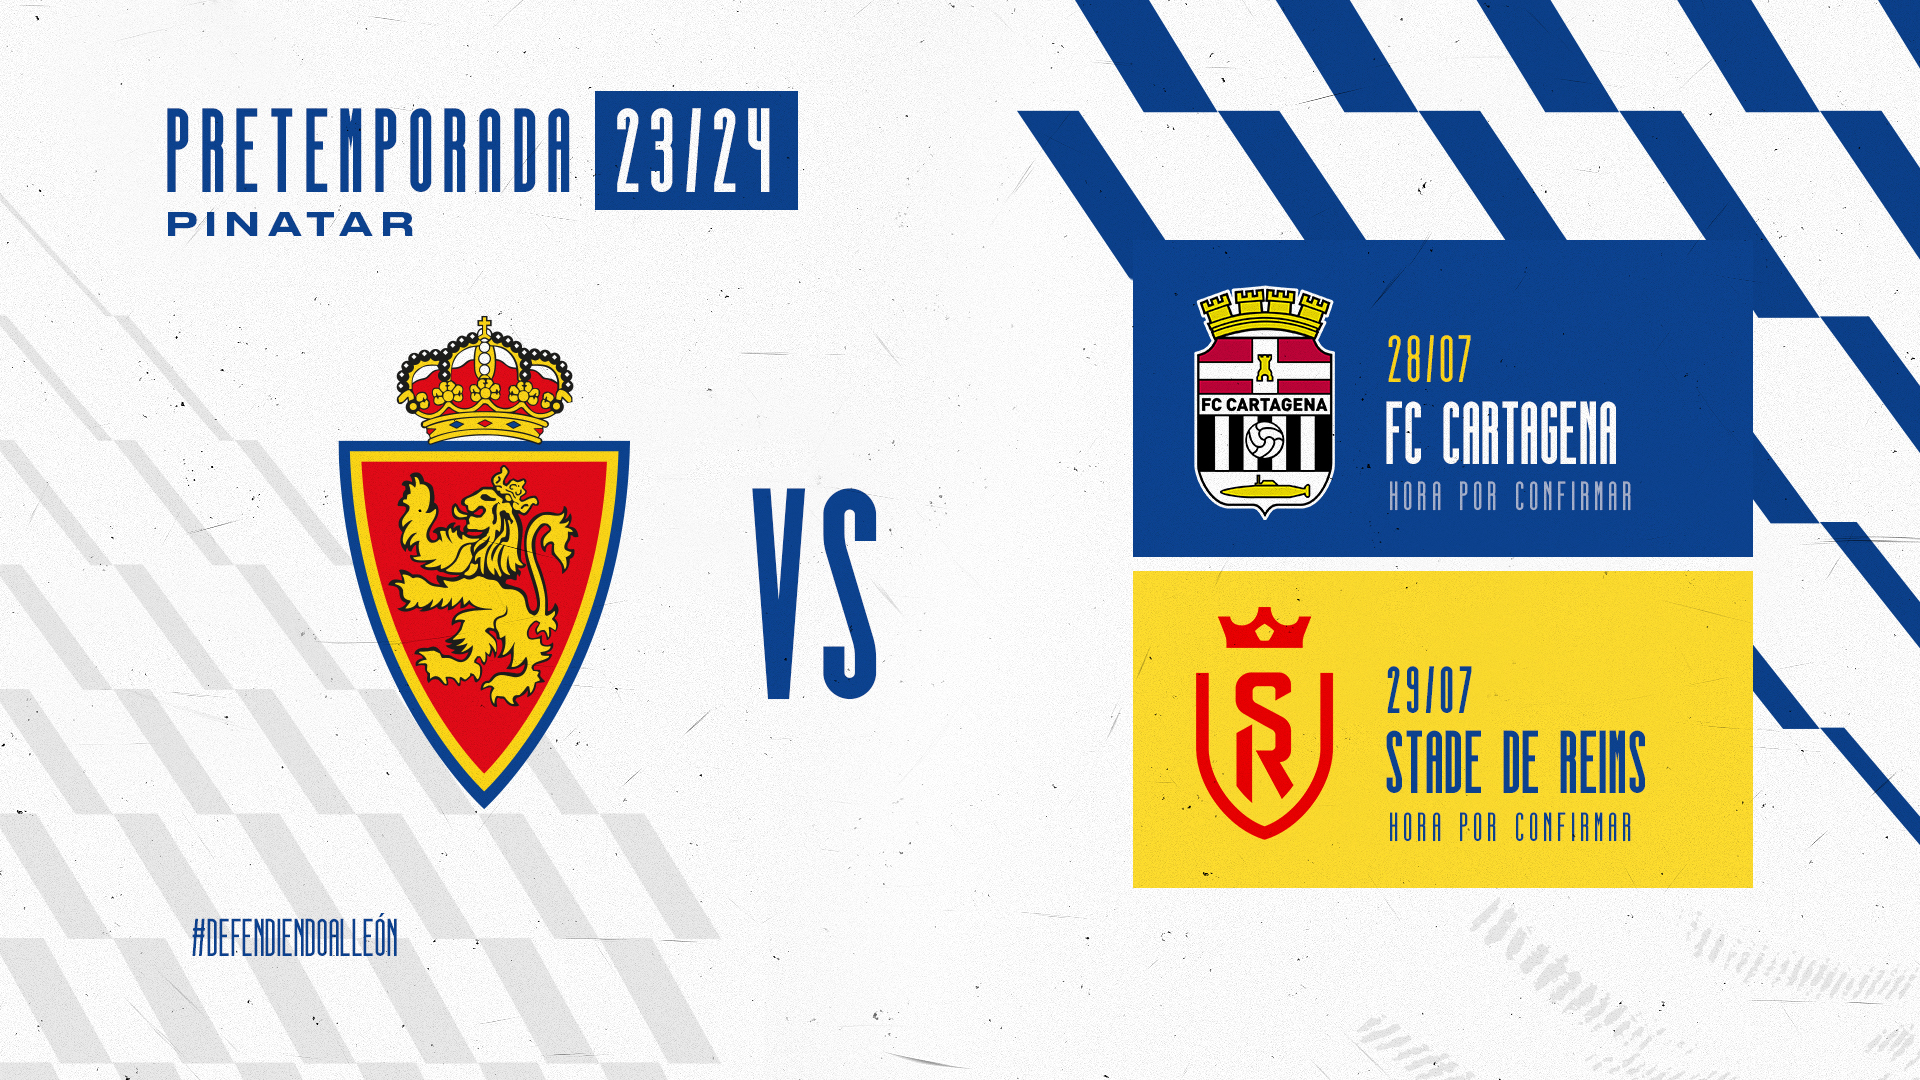 FIFA 23, Real Racing Club vs FC Cartagena - LaLiga Smartbank